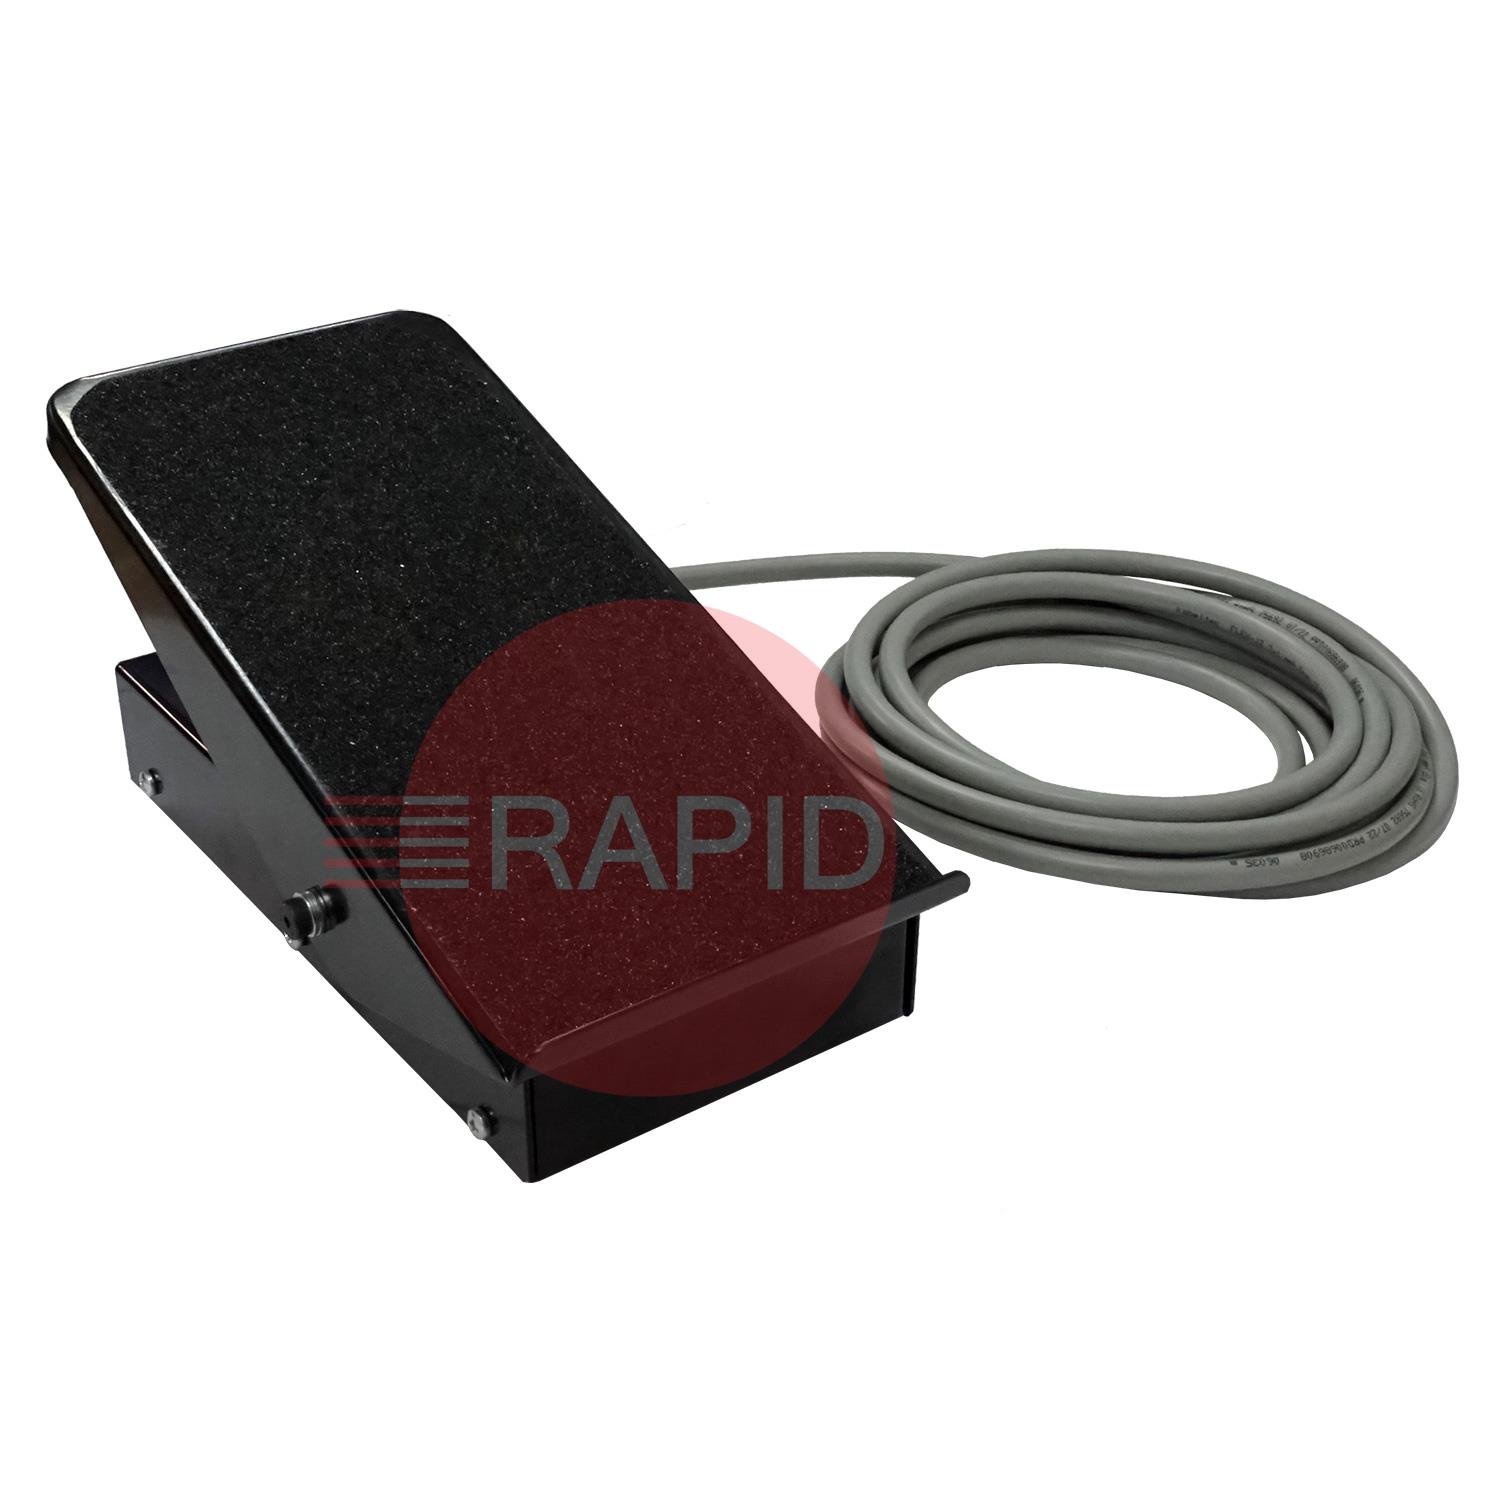 FSMT2816  Migatronic Mdu 300 / 400 Footpedal C/ W 8 Pin Amphenol And 6 Pin Square Harting Plug